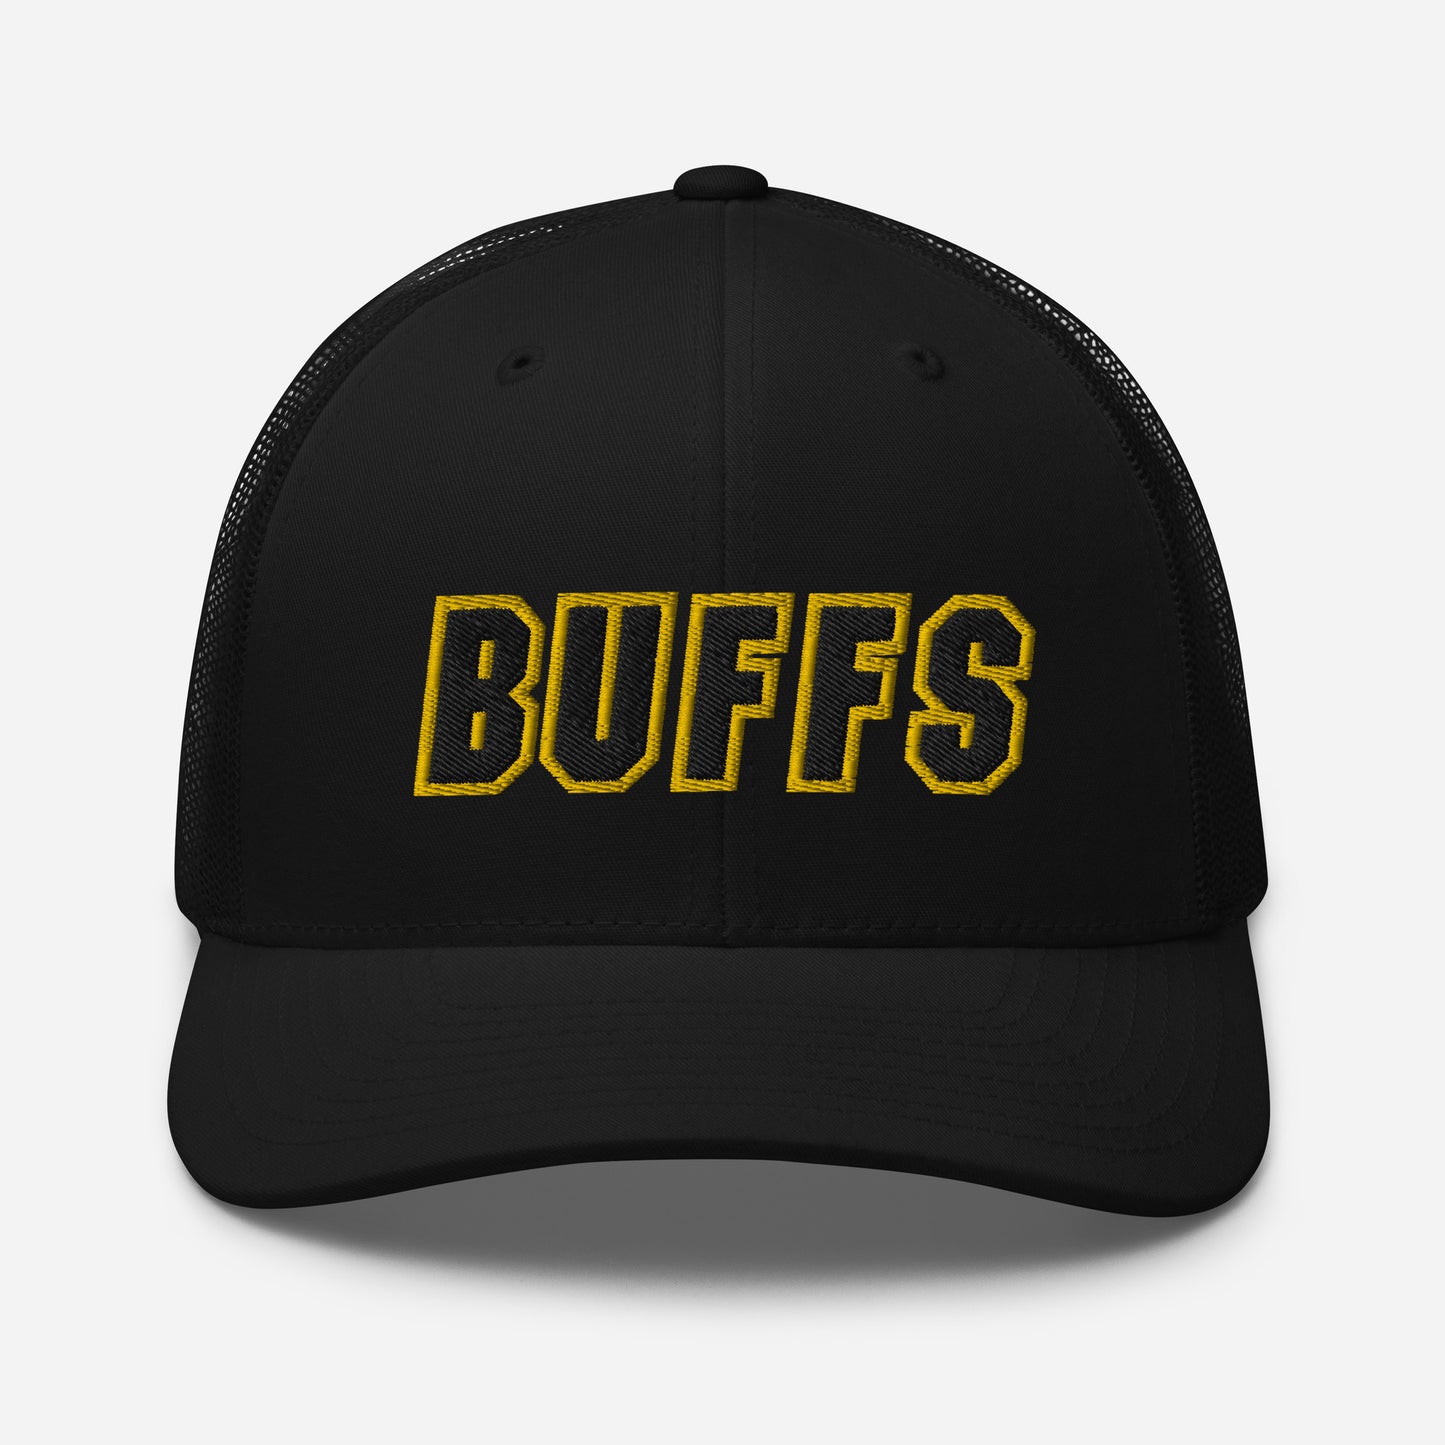 Colorado Trucker Hat: Buffs